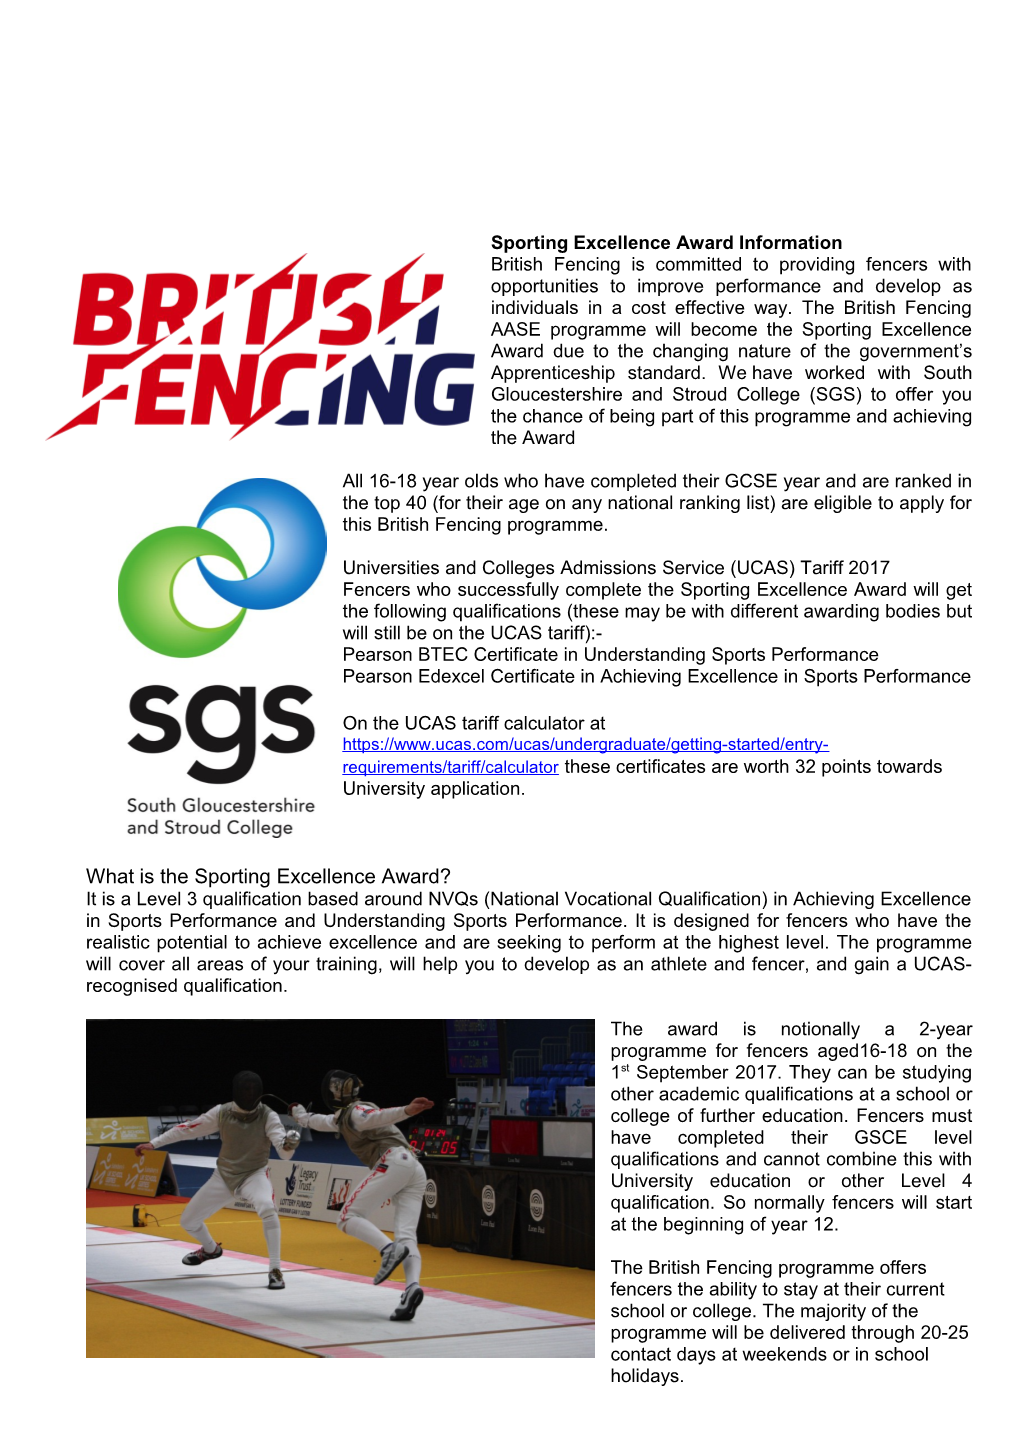 British Fencing - AASE